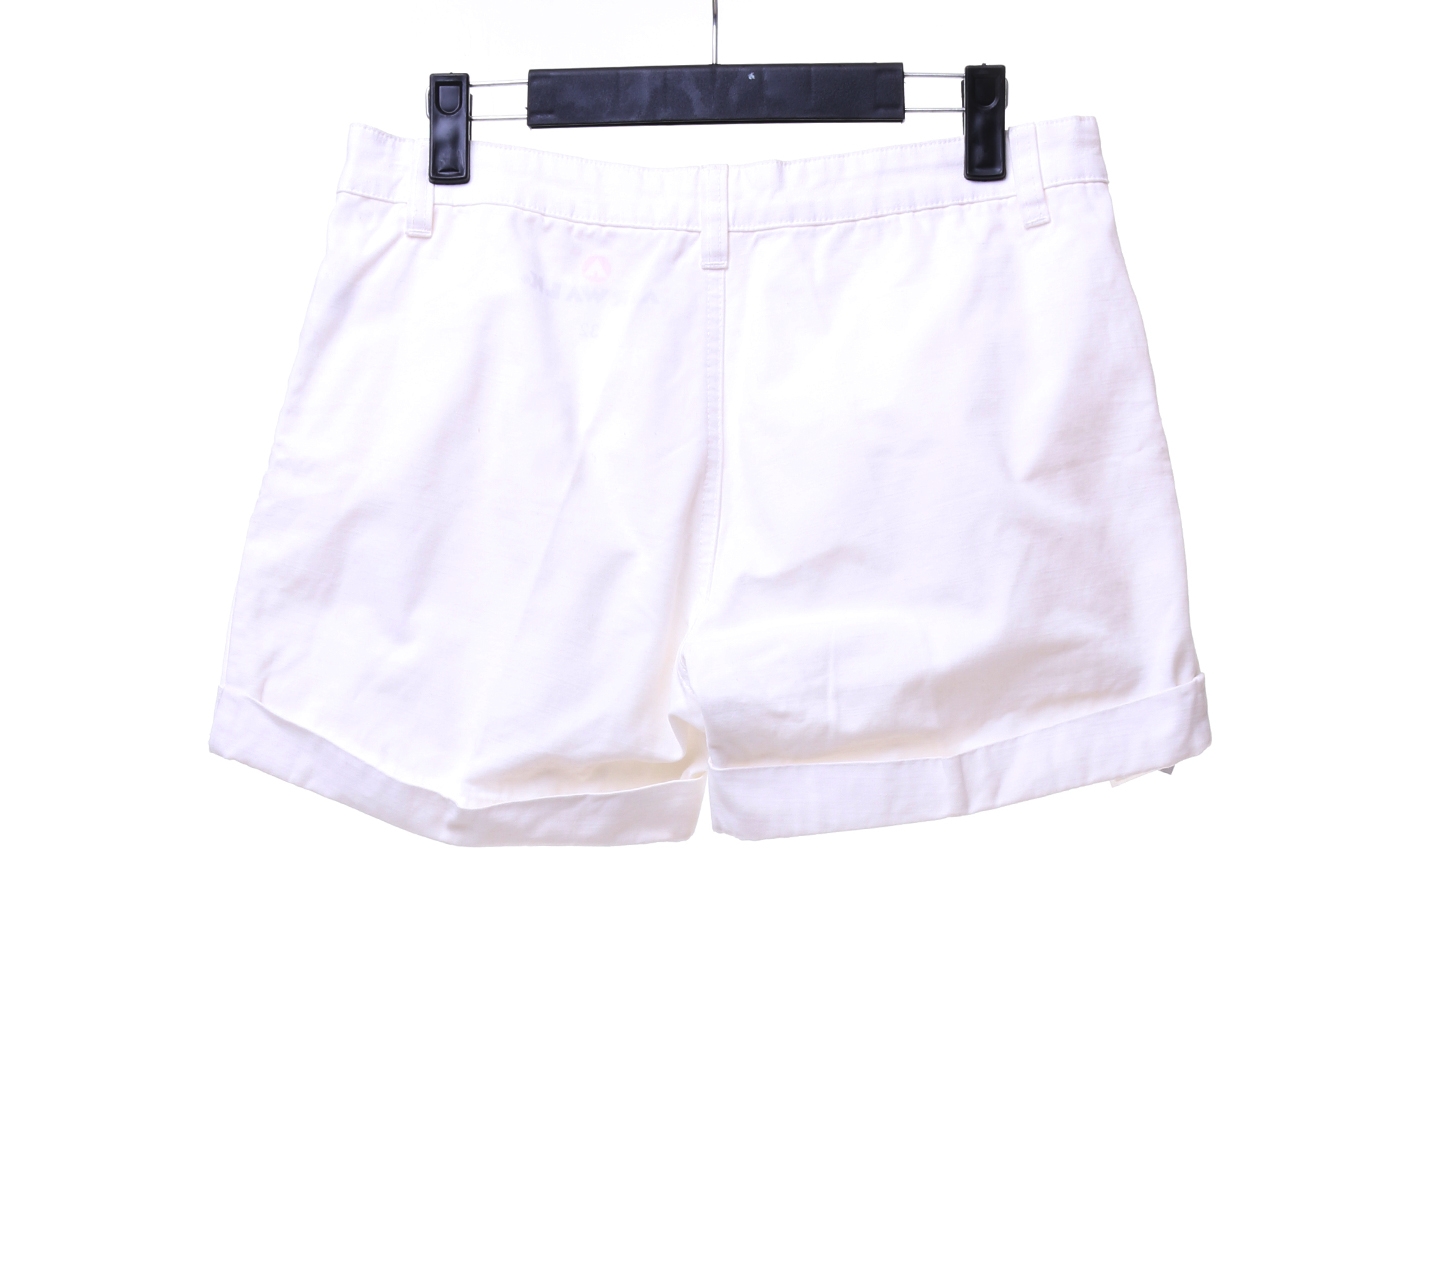 Airwalk White Short Pants